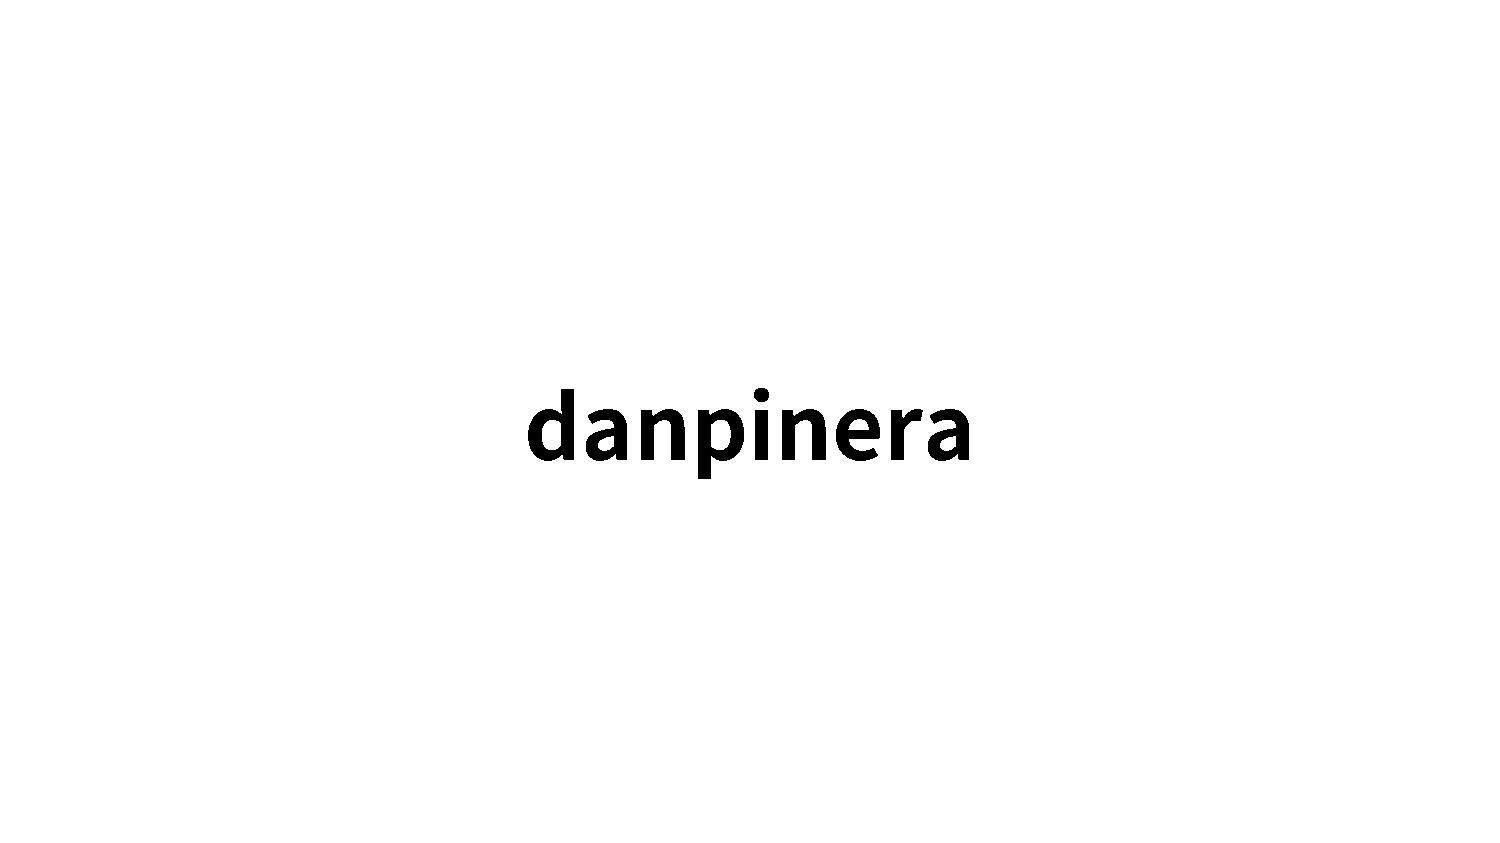 DANPINERA